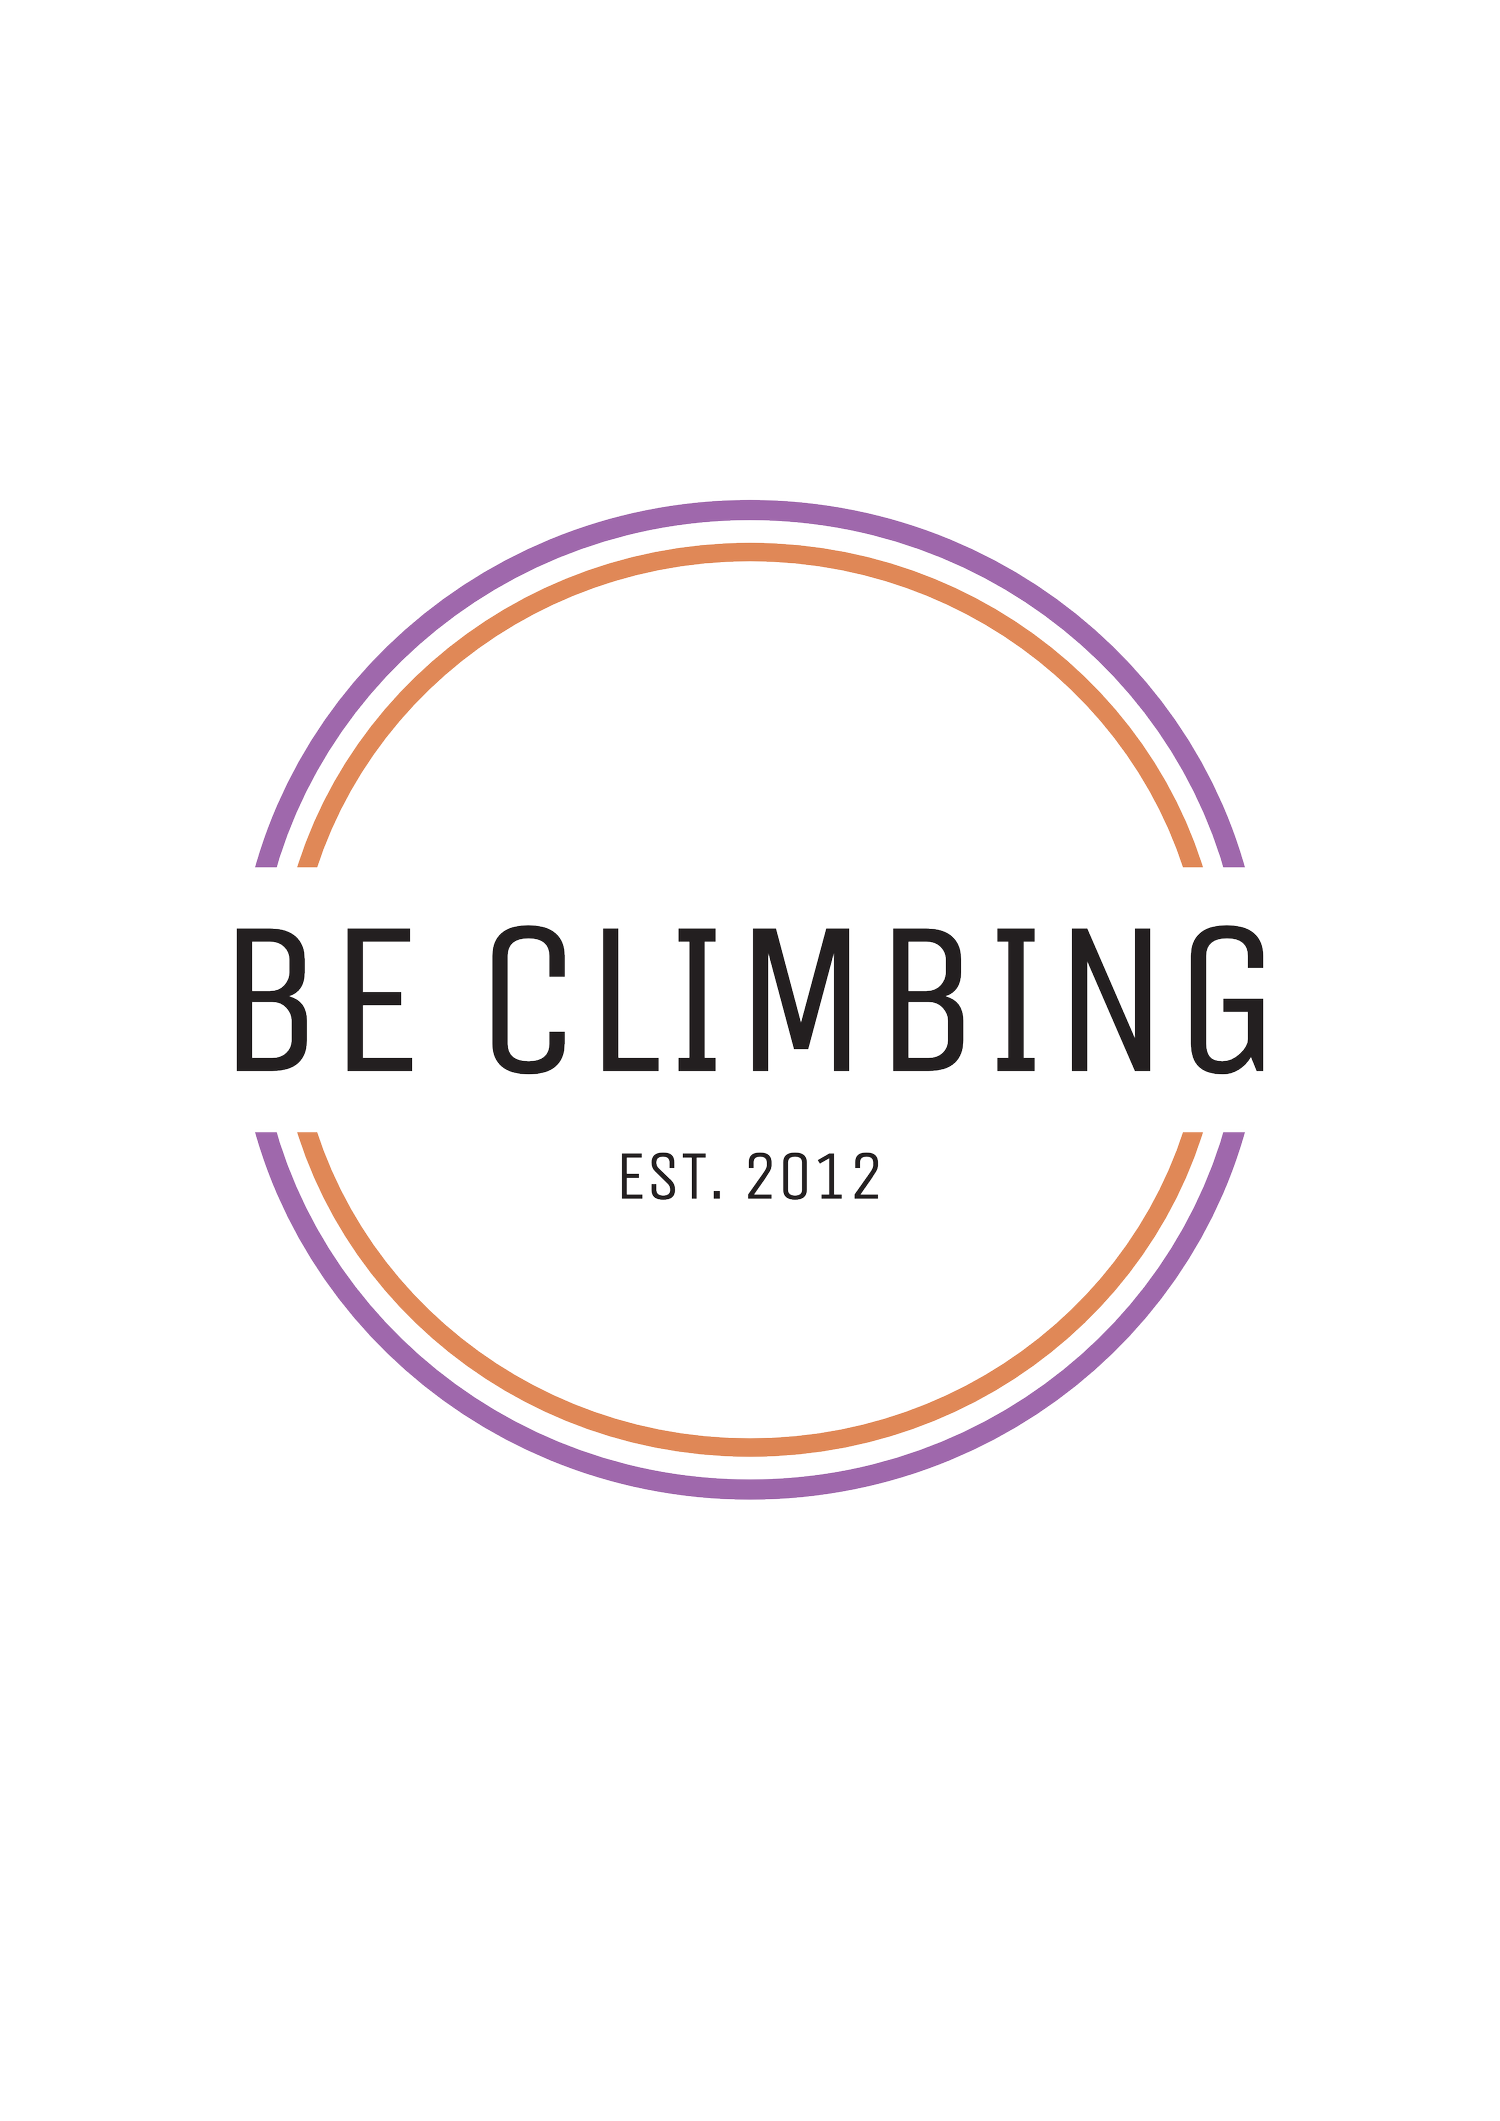 Be Climbing